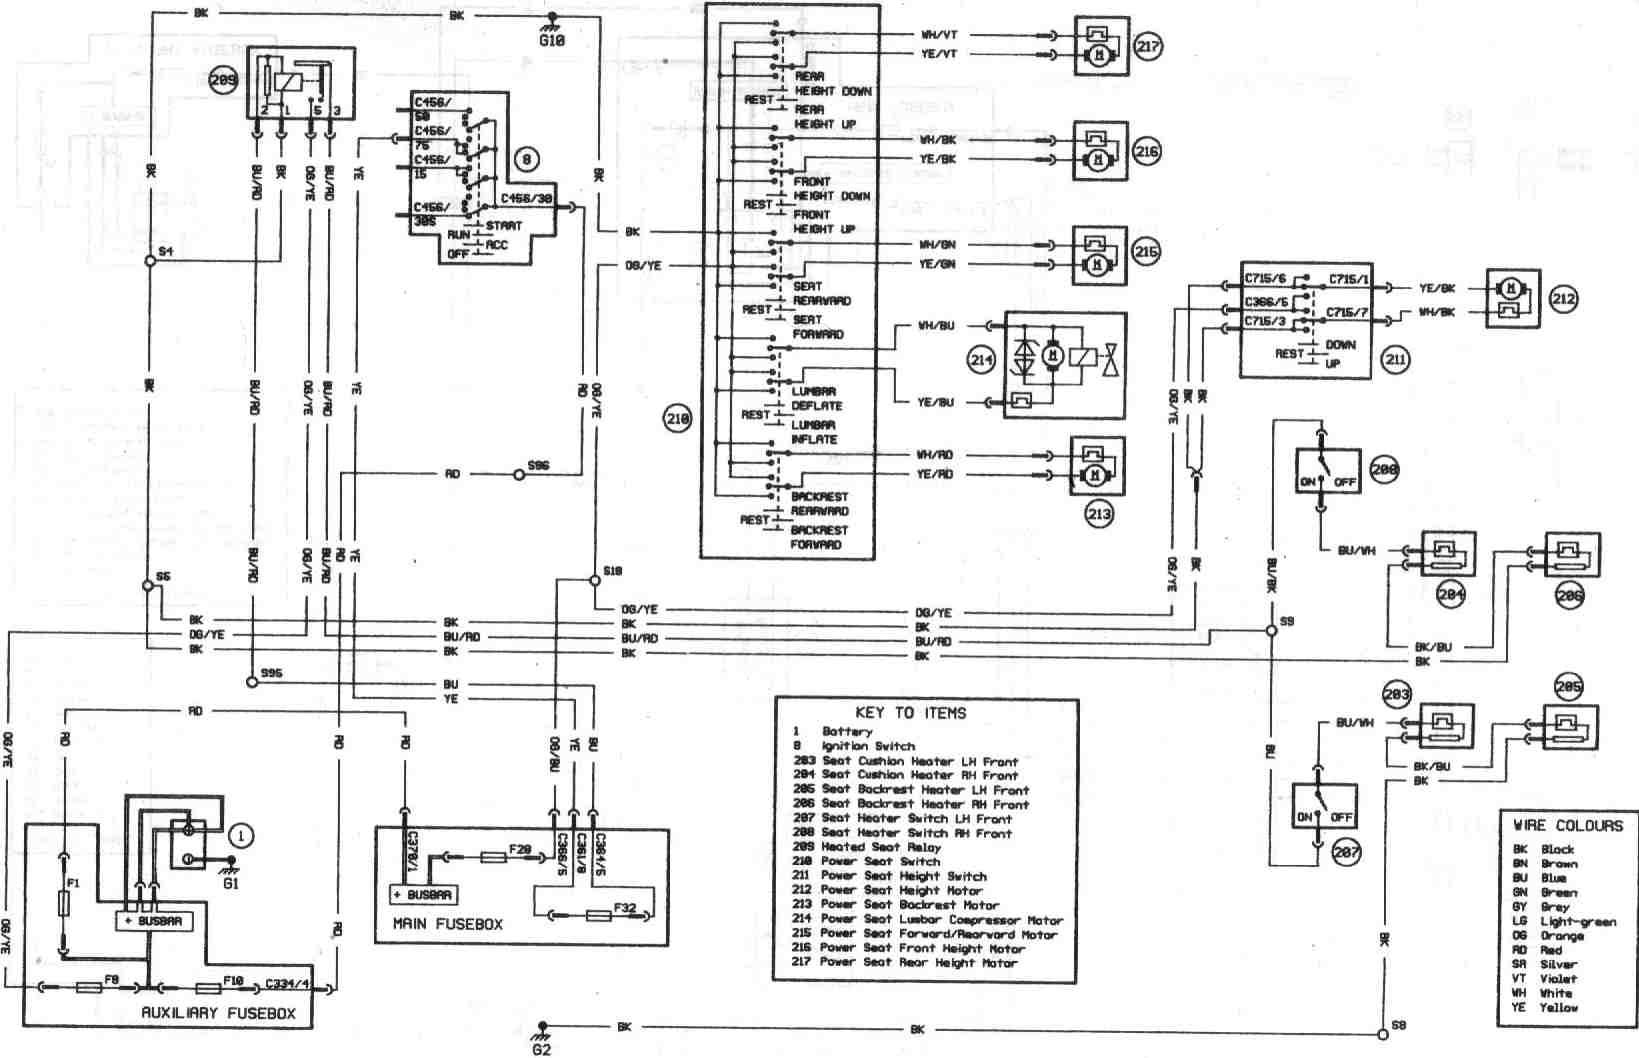 Ford mondeo mk4 radio wiring diagram #1